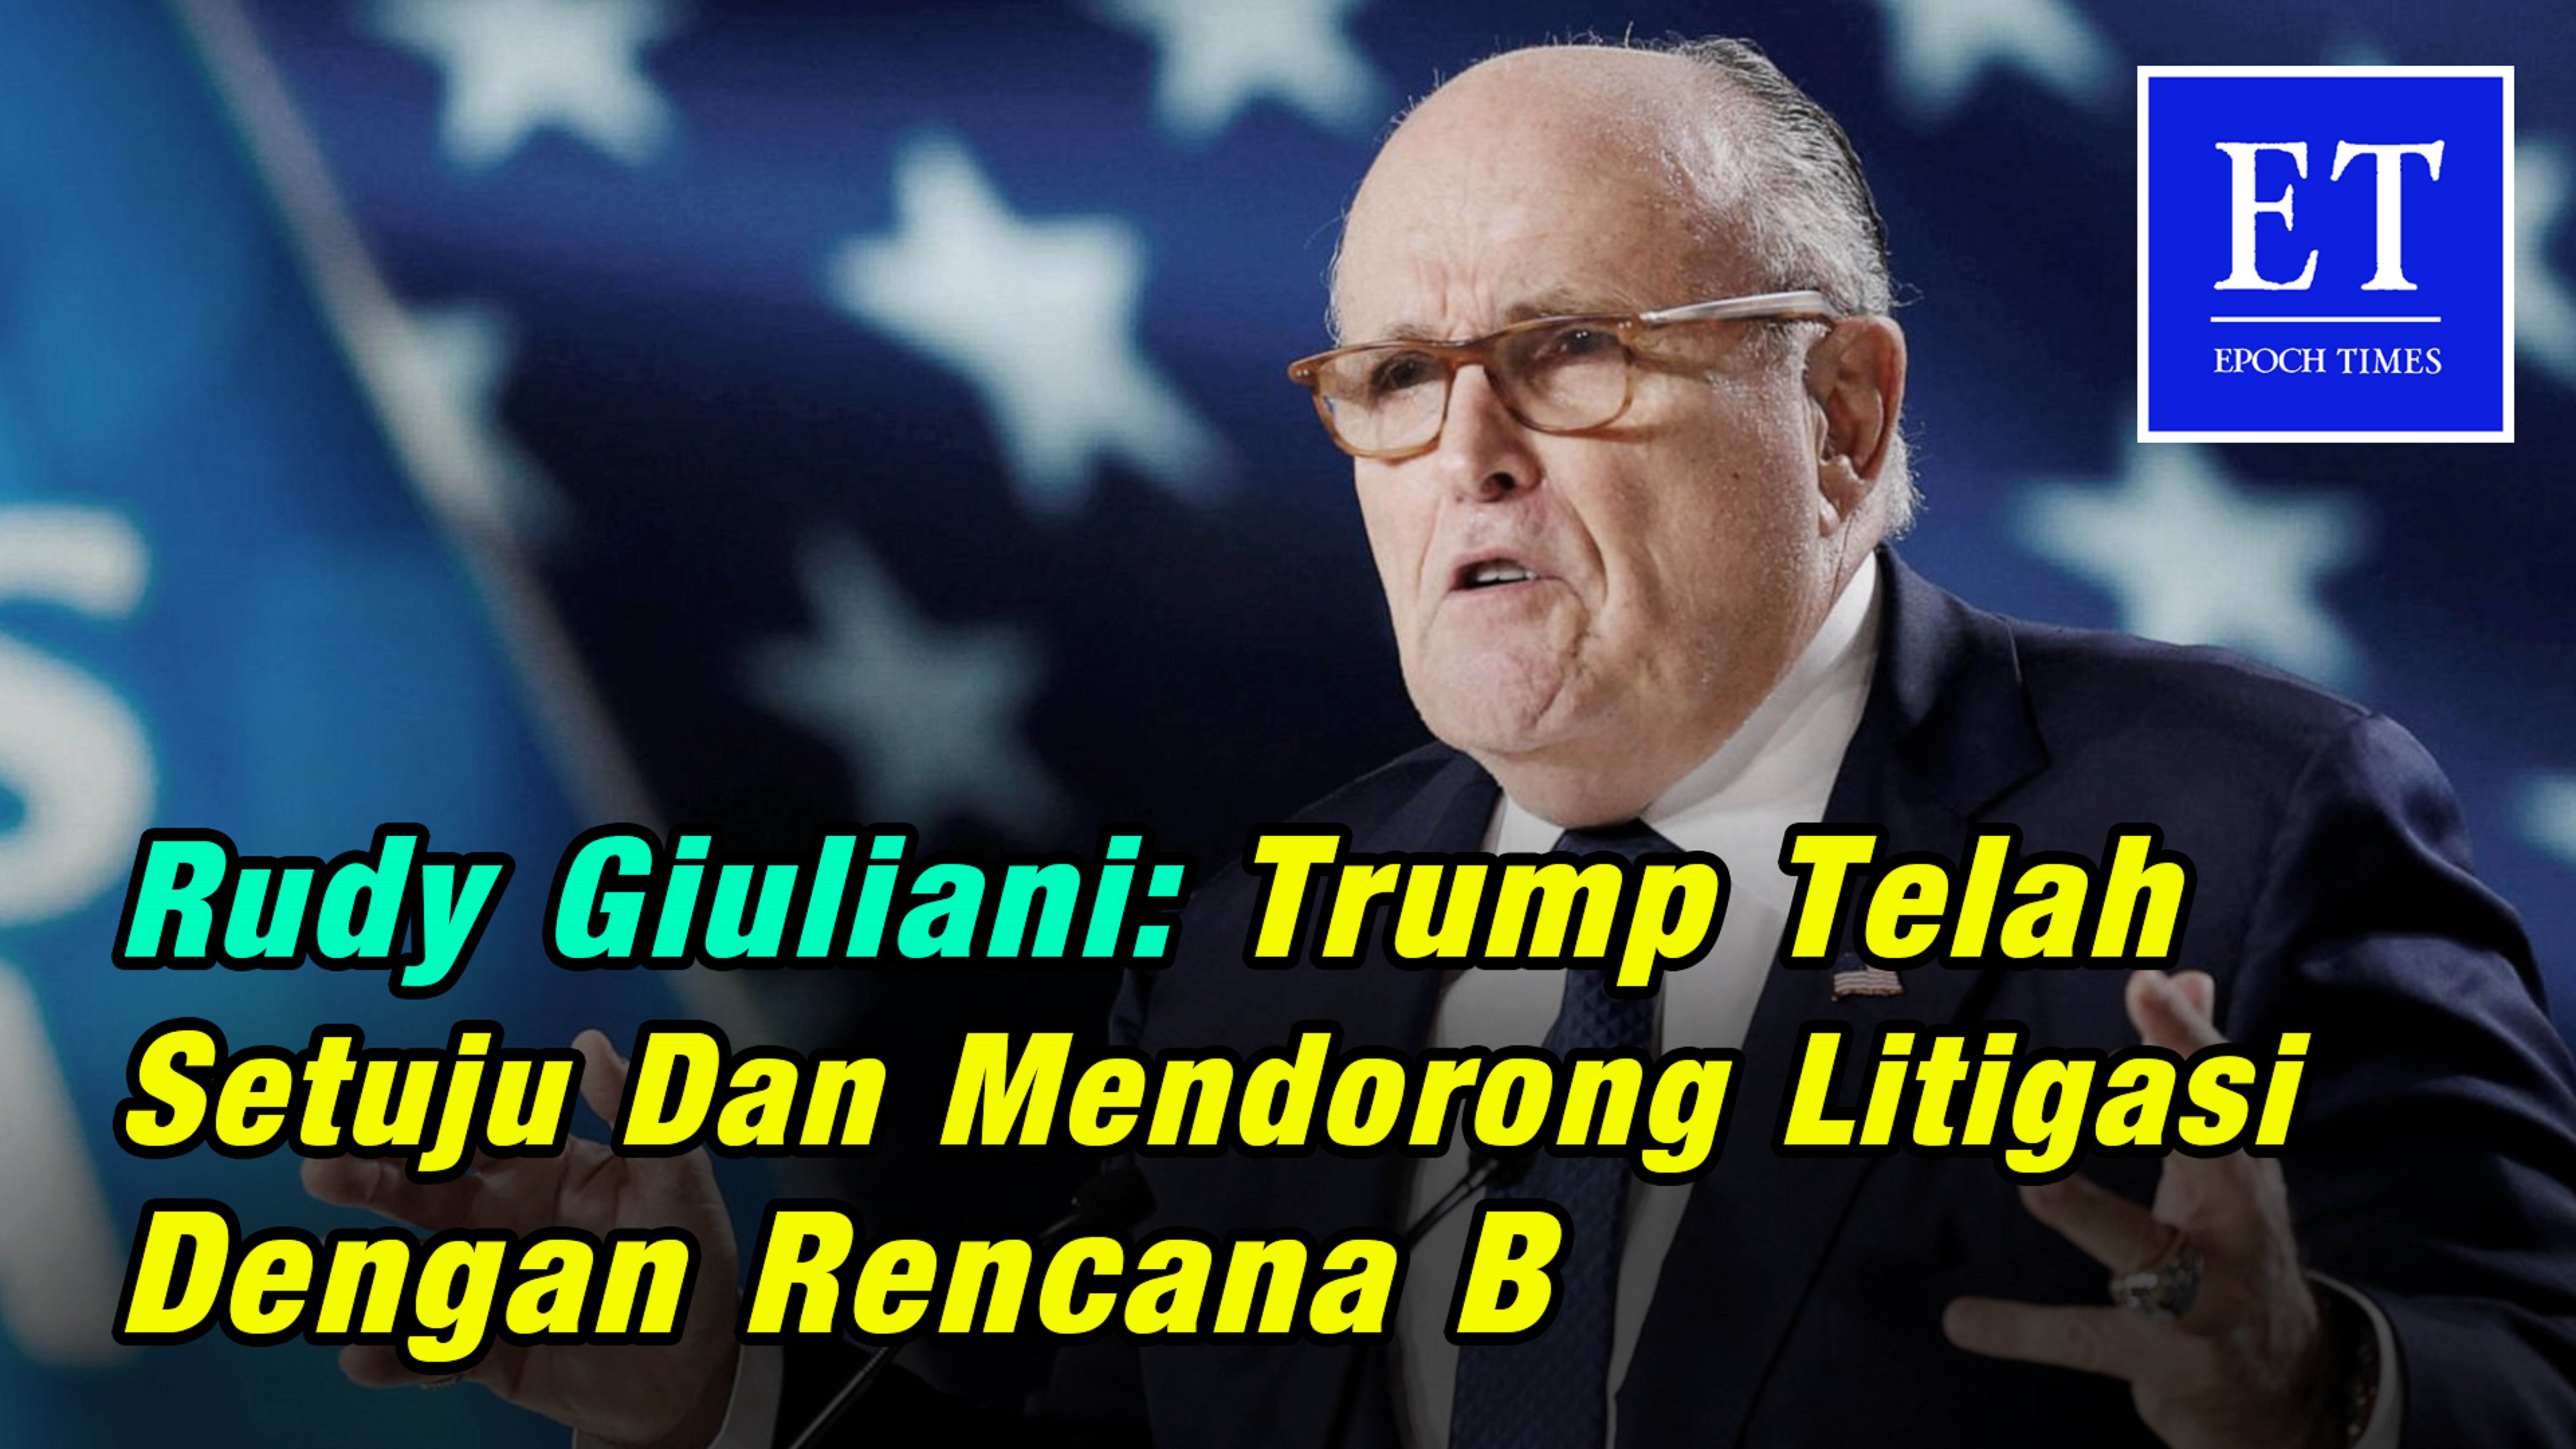 Rudy Giuliani: Trump telah Setuju dan Mendorong Litigasi dengan Rencana B